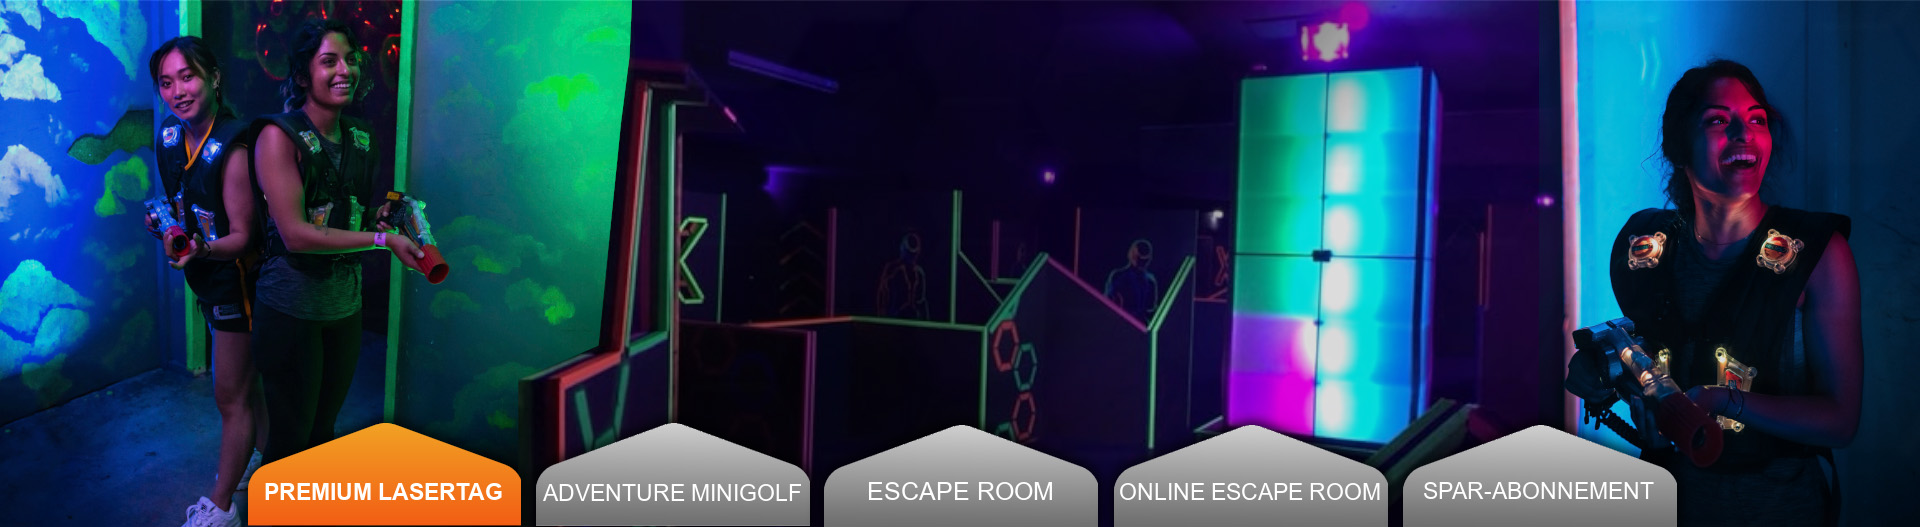 Laserstar Berlin Premium Lasertag Minigolf And Escape Rooms 8664